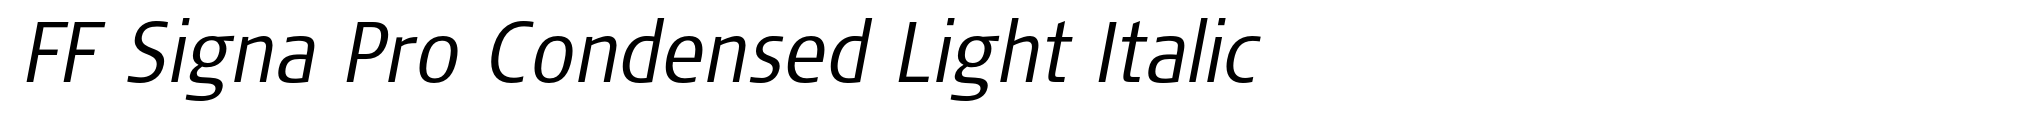 FF Signa Pro Condensed Light Italic image